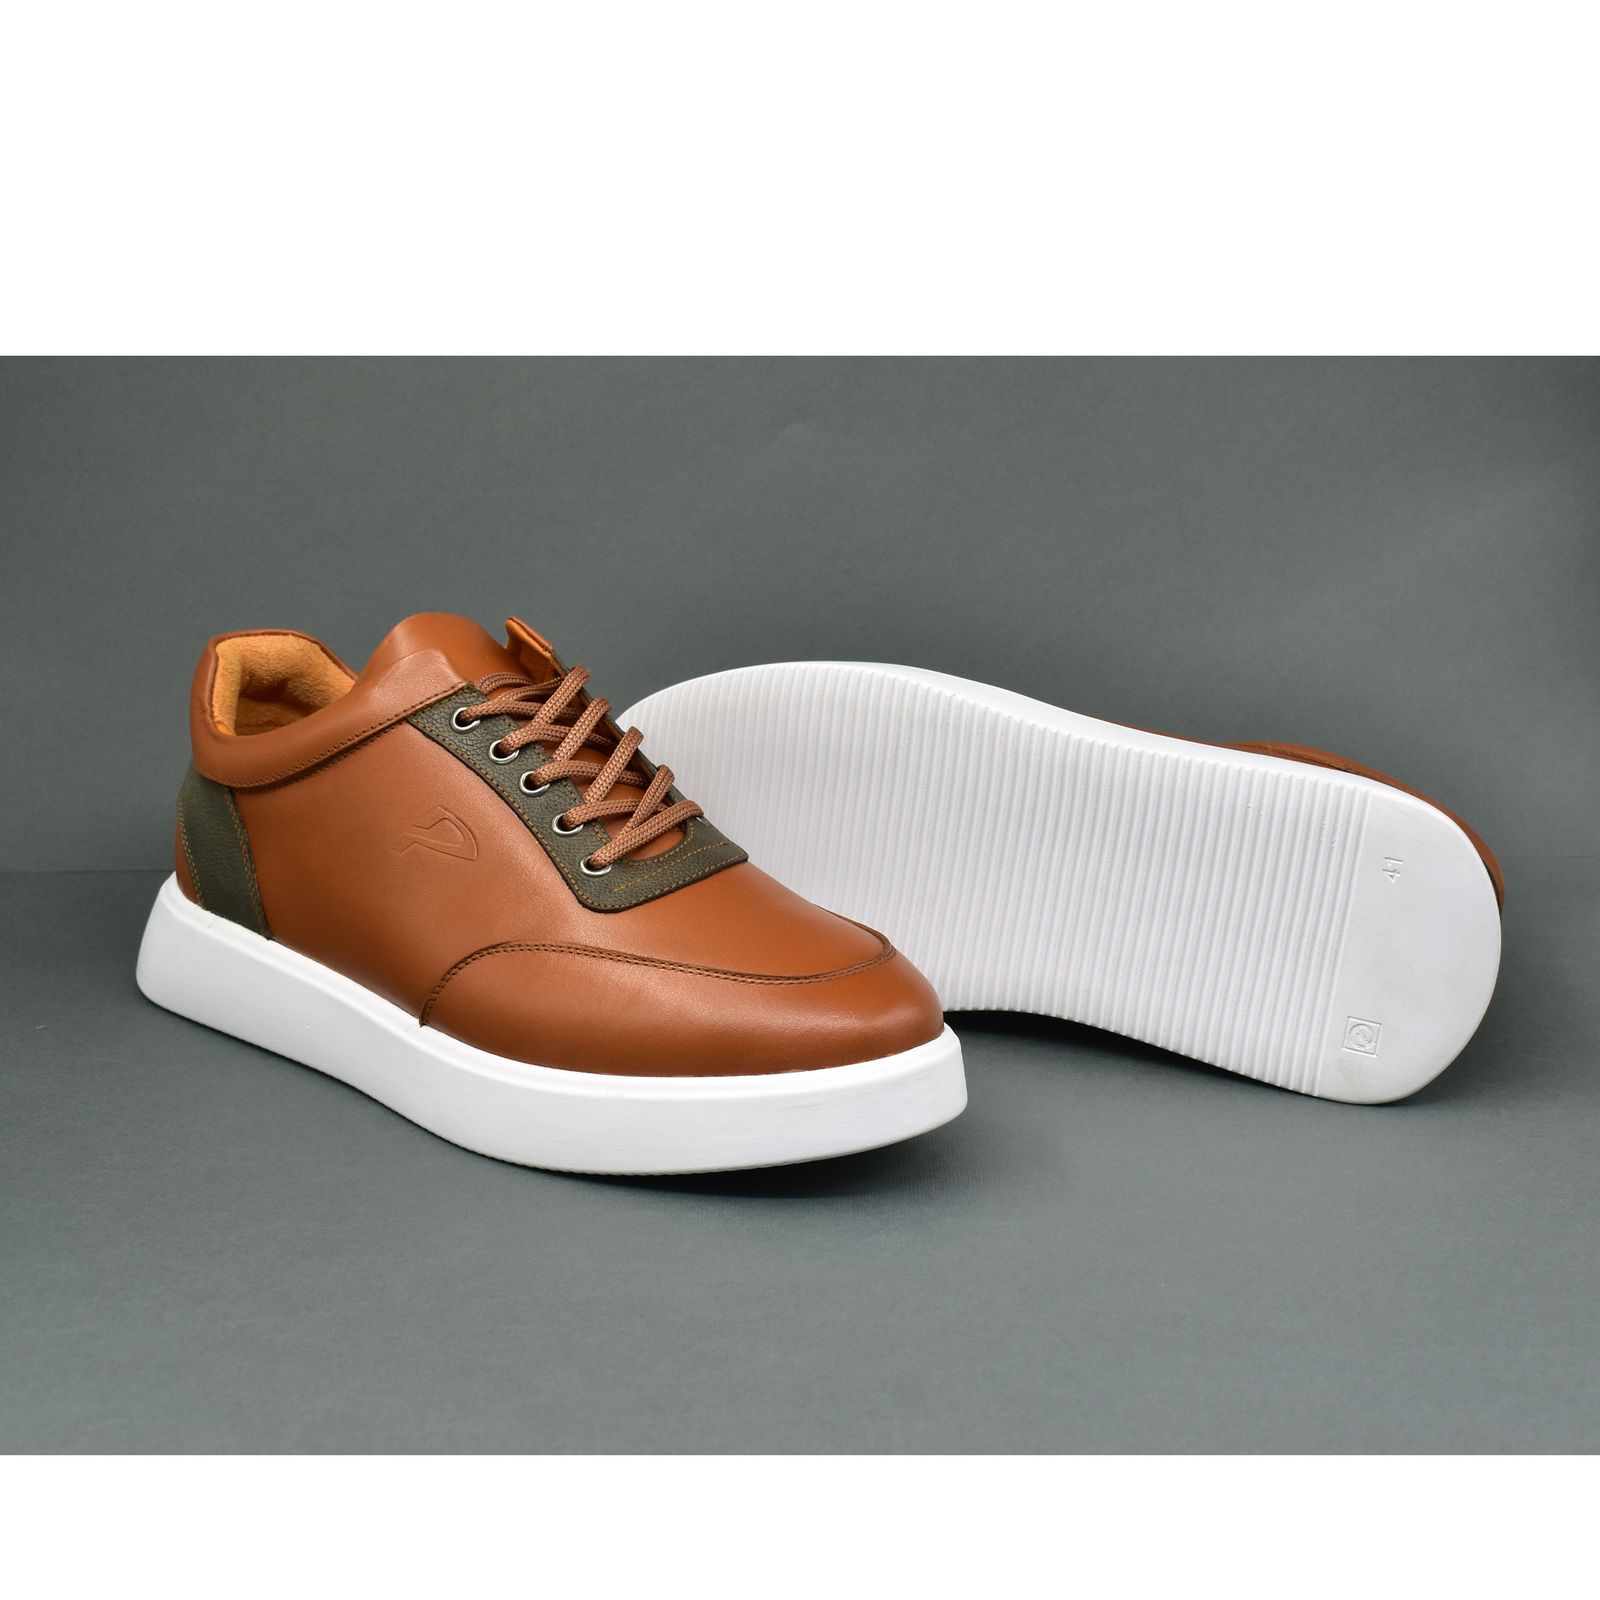 کفش روزمره مردانه پاما مدل ME-403 کد G1806 -  - 6